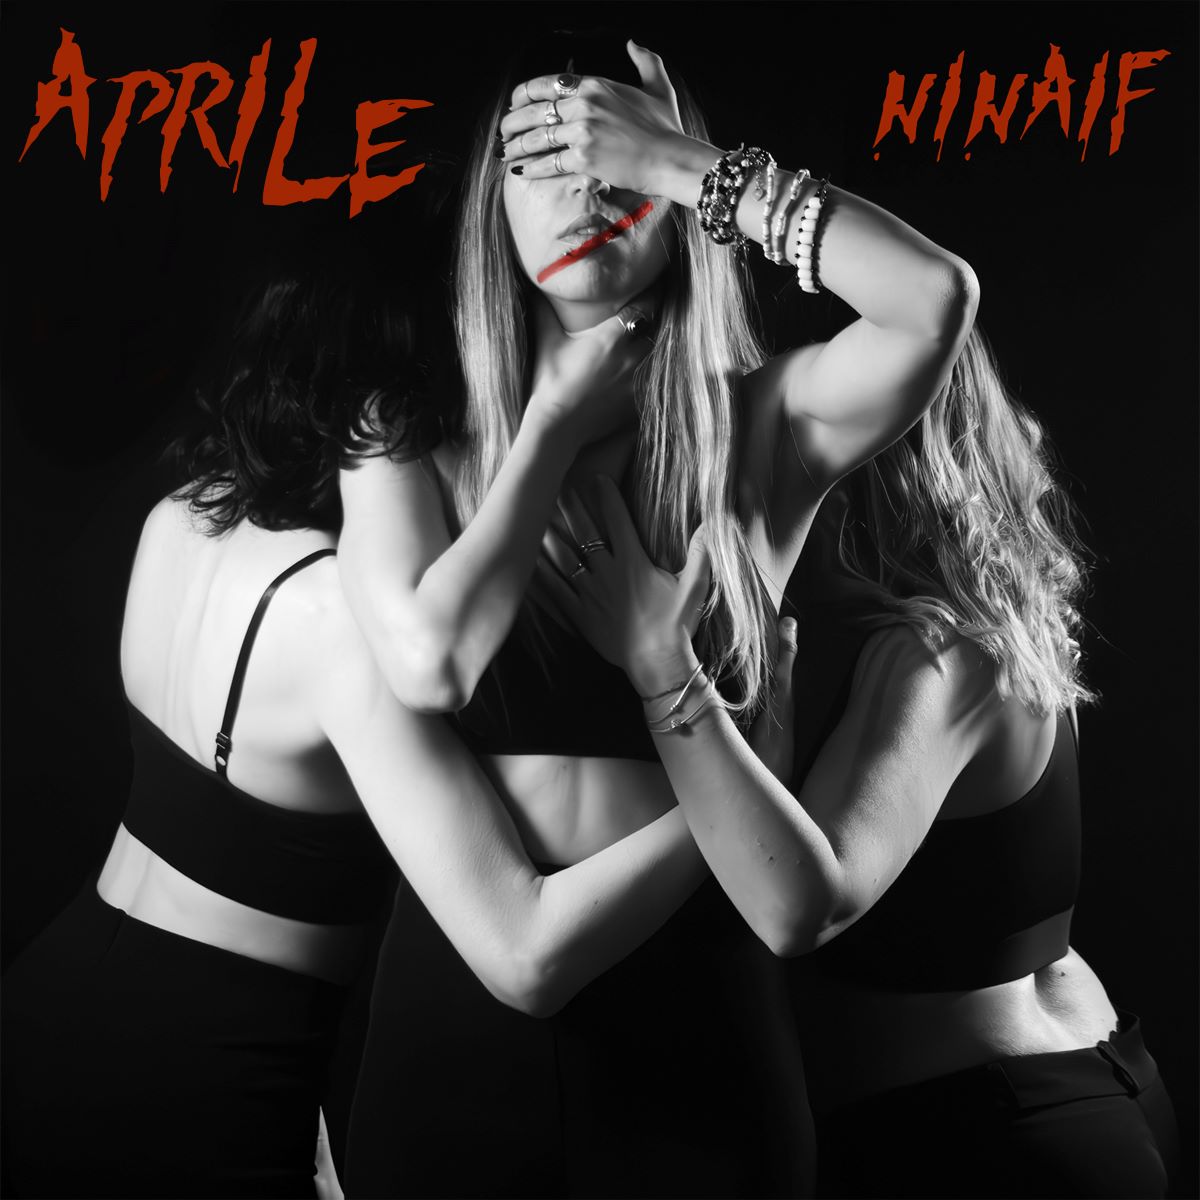 Ninaif - Il nuovo singolo “Aprile”